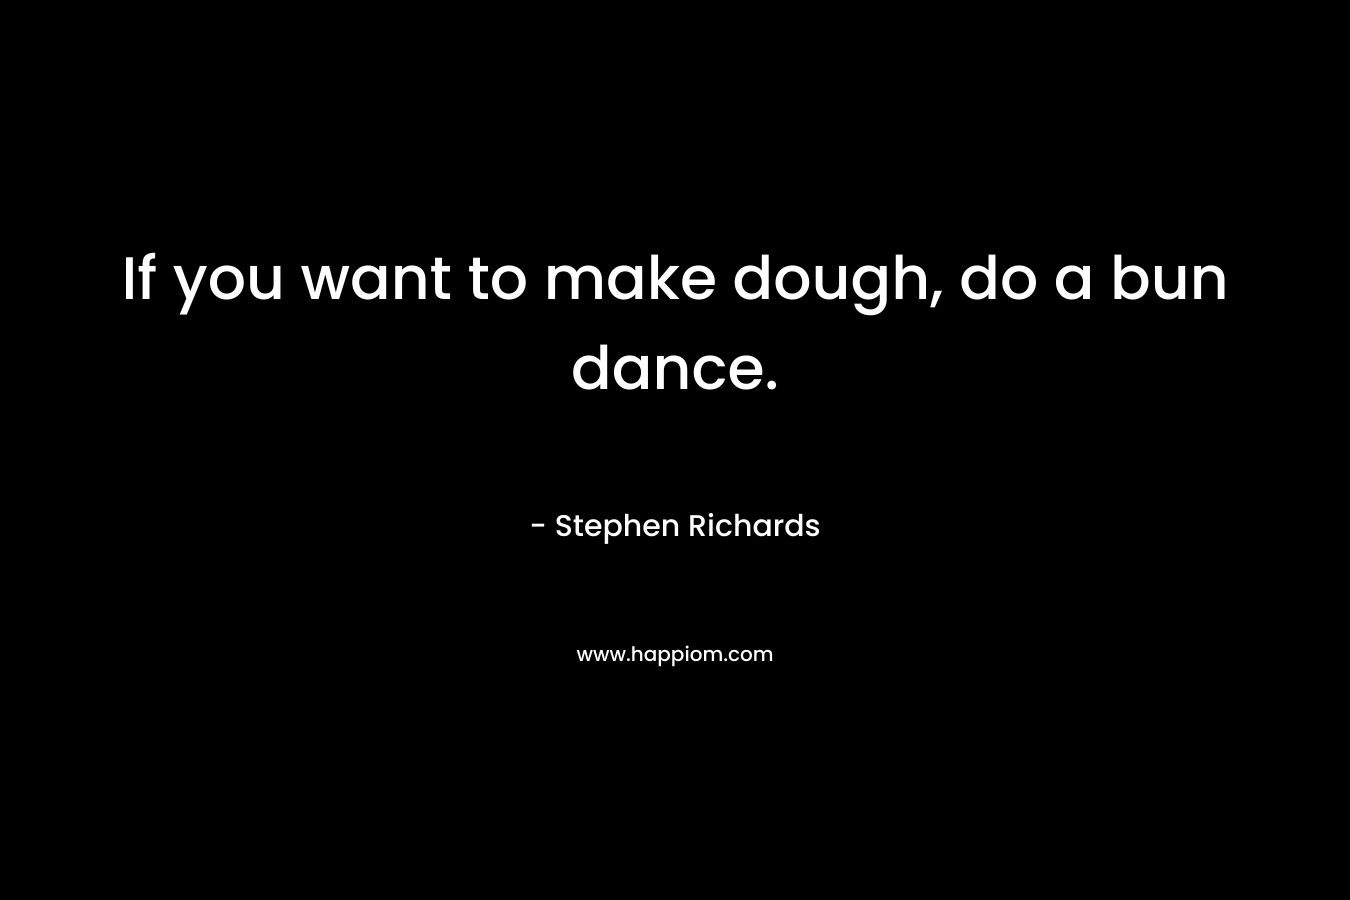 If you want to make dough, do a bun dance. – Stephen Richards